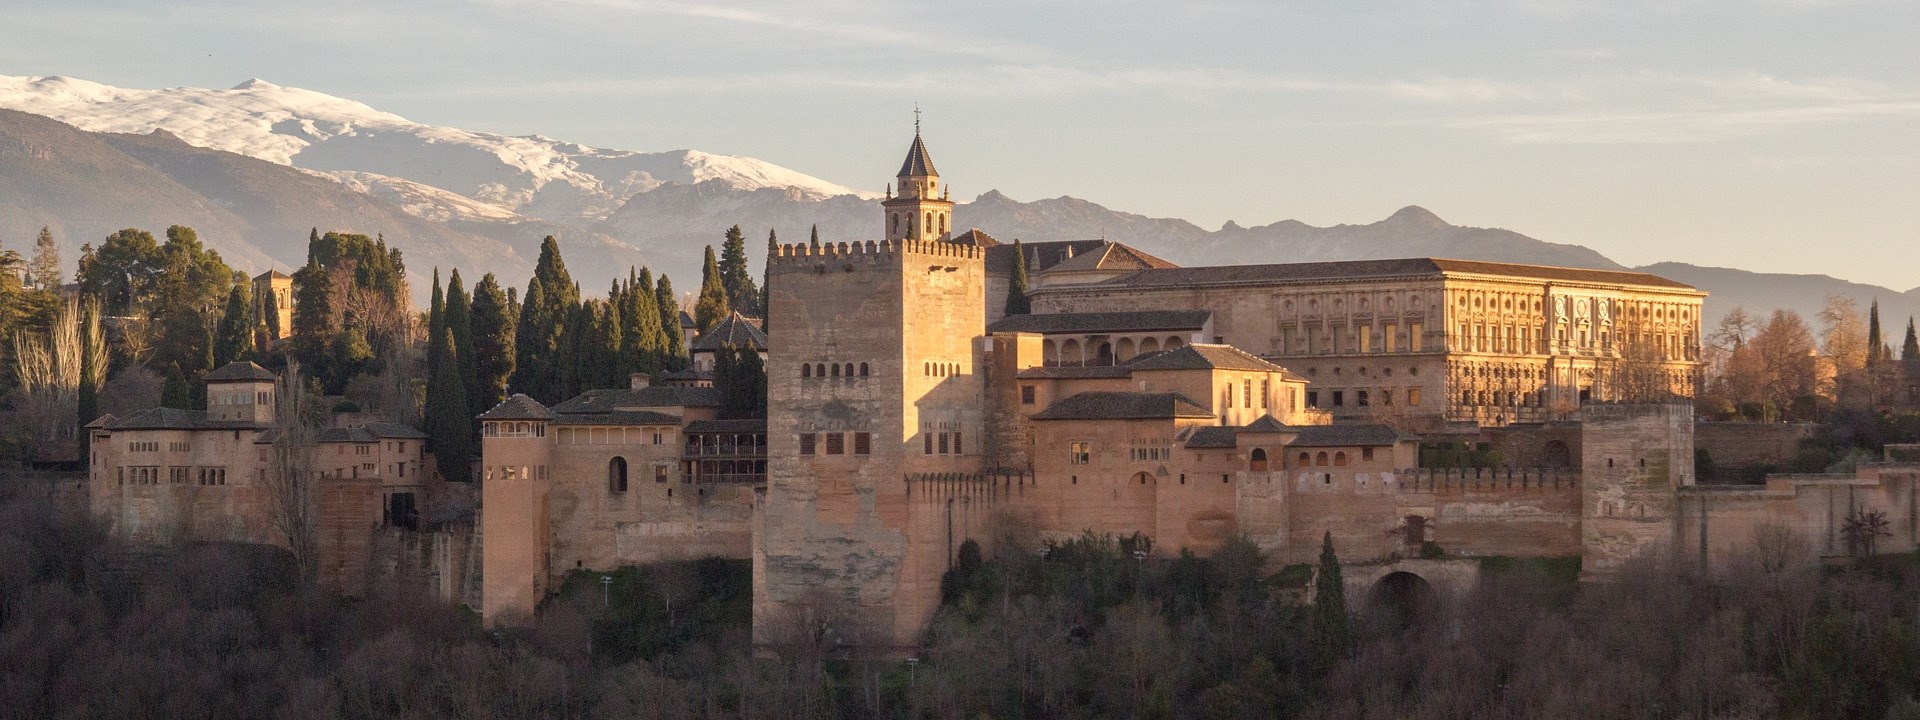 Andalucia alhambra palace